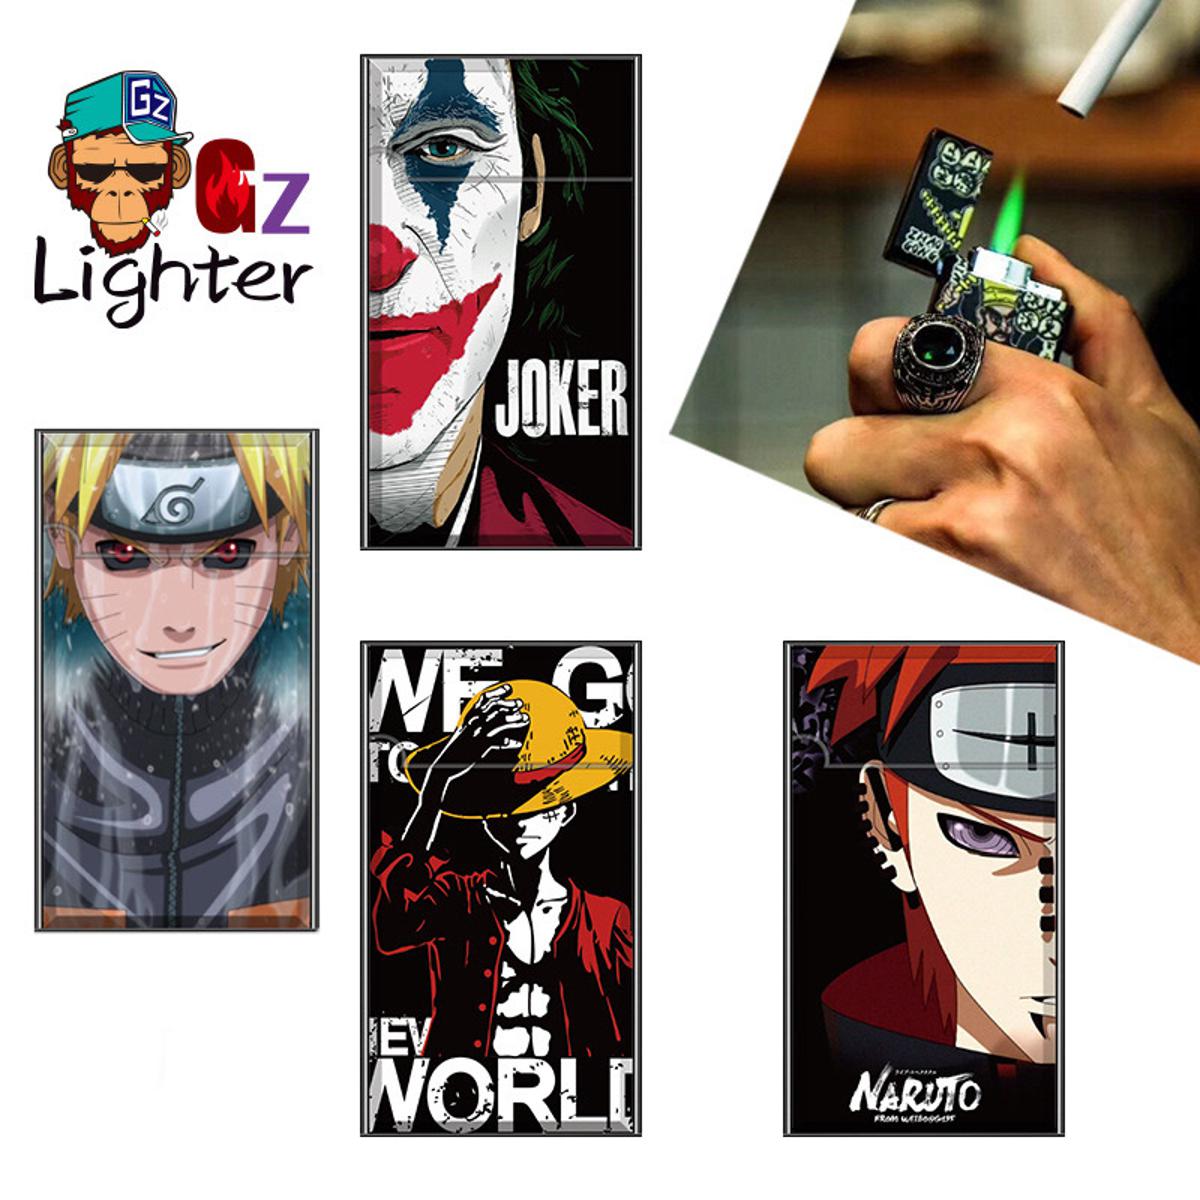 Anime Lighter-One Piece-Luffy 5th gear joy boy - The Engrave Slave